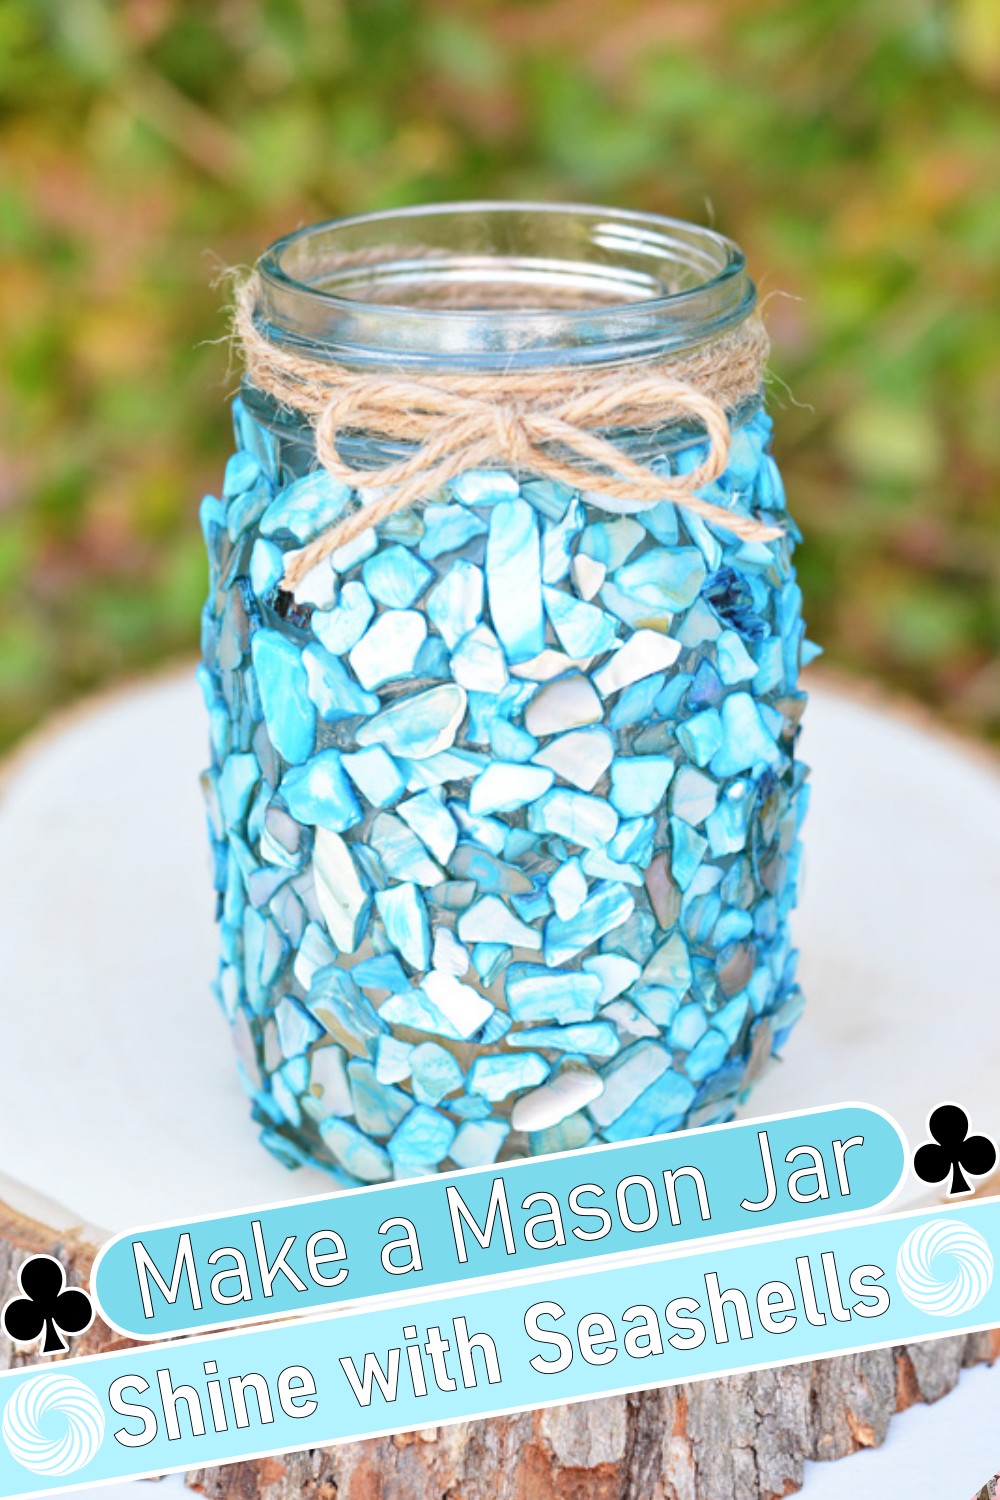 Make a Mason Jar Shine with Seashells